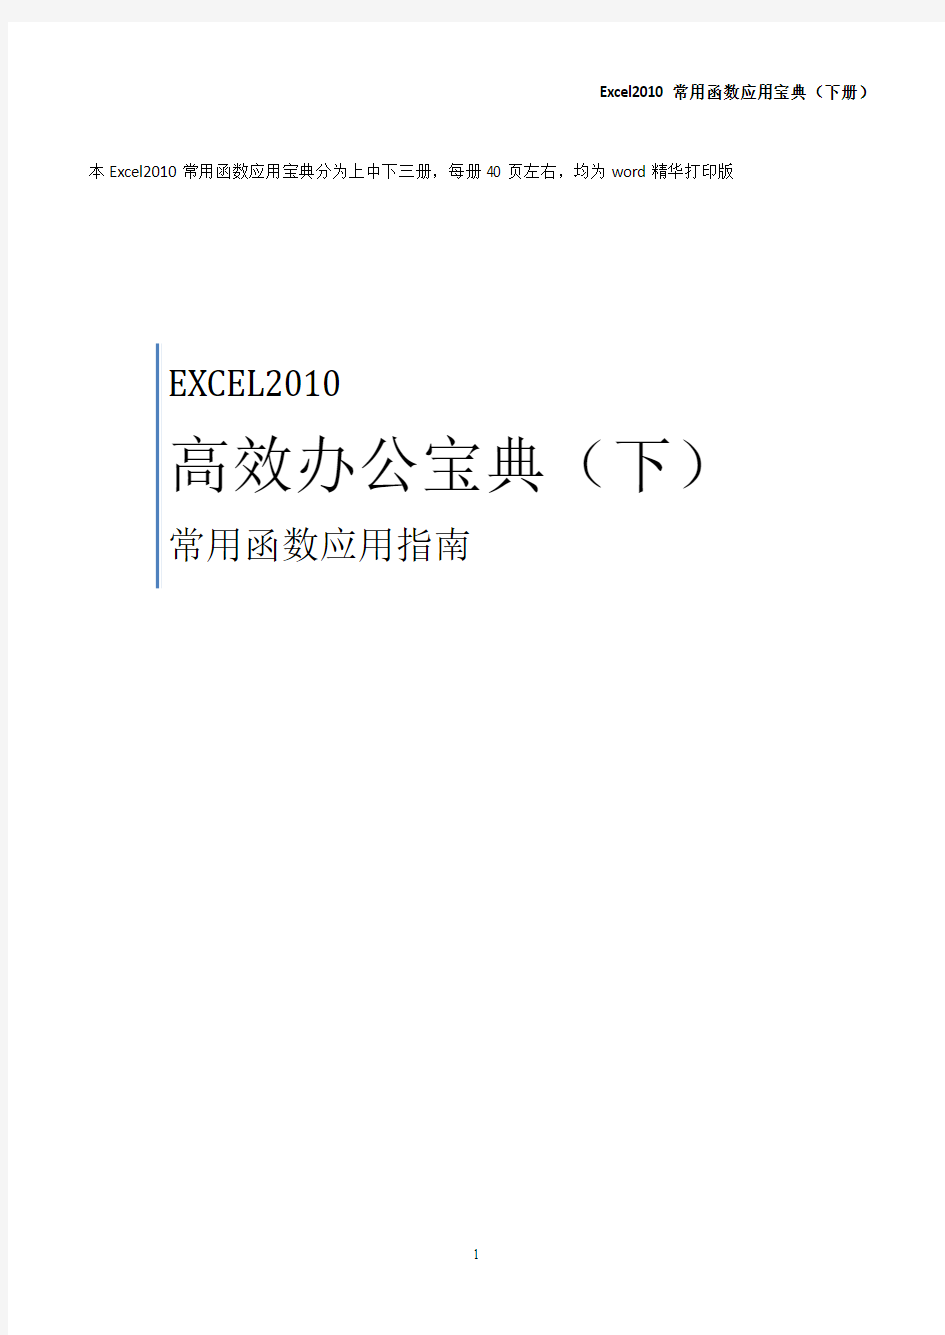 EXCEL2010常用函数应用技巧宝典  (下册)共44页Word打印版